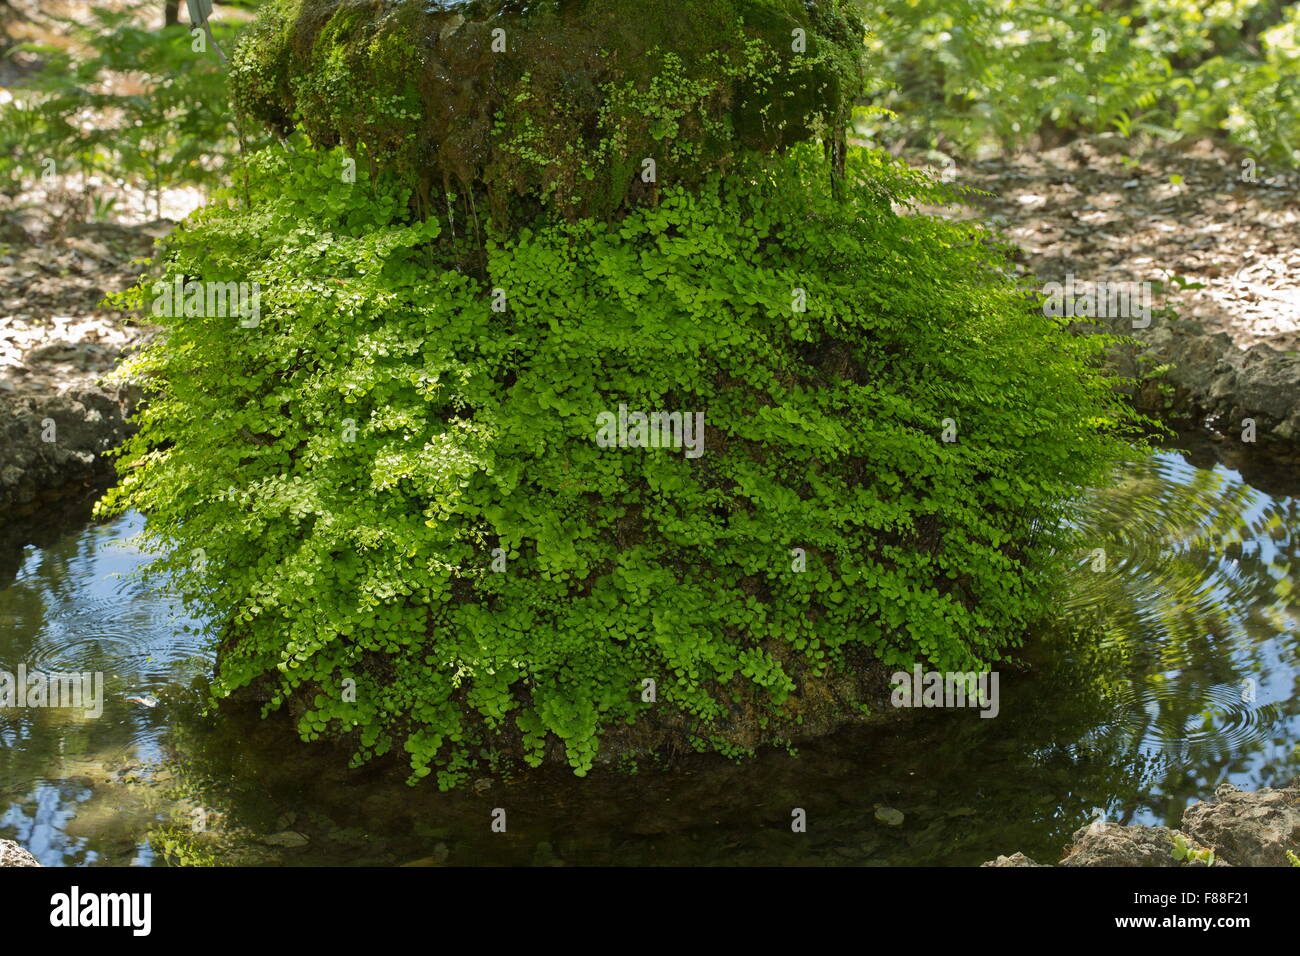 Maidenhair fern, Adiantum capillus-veneris, around water-fed garden feature. Spain. Stock Photo